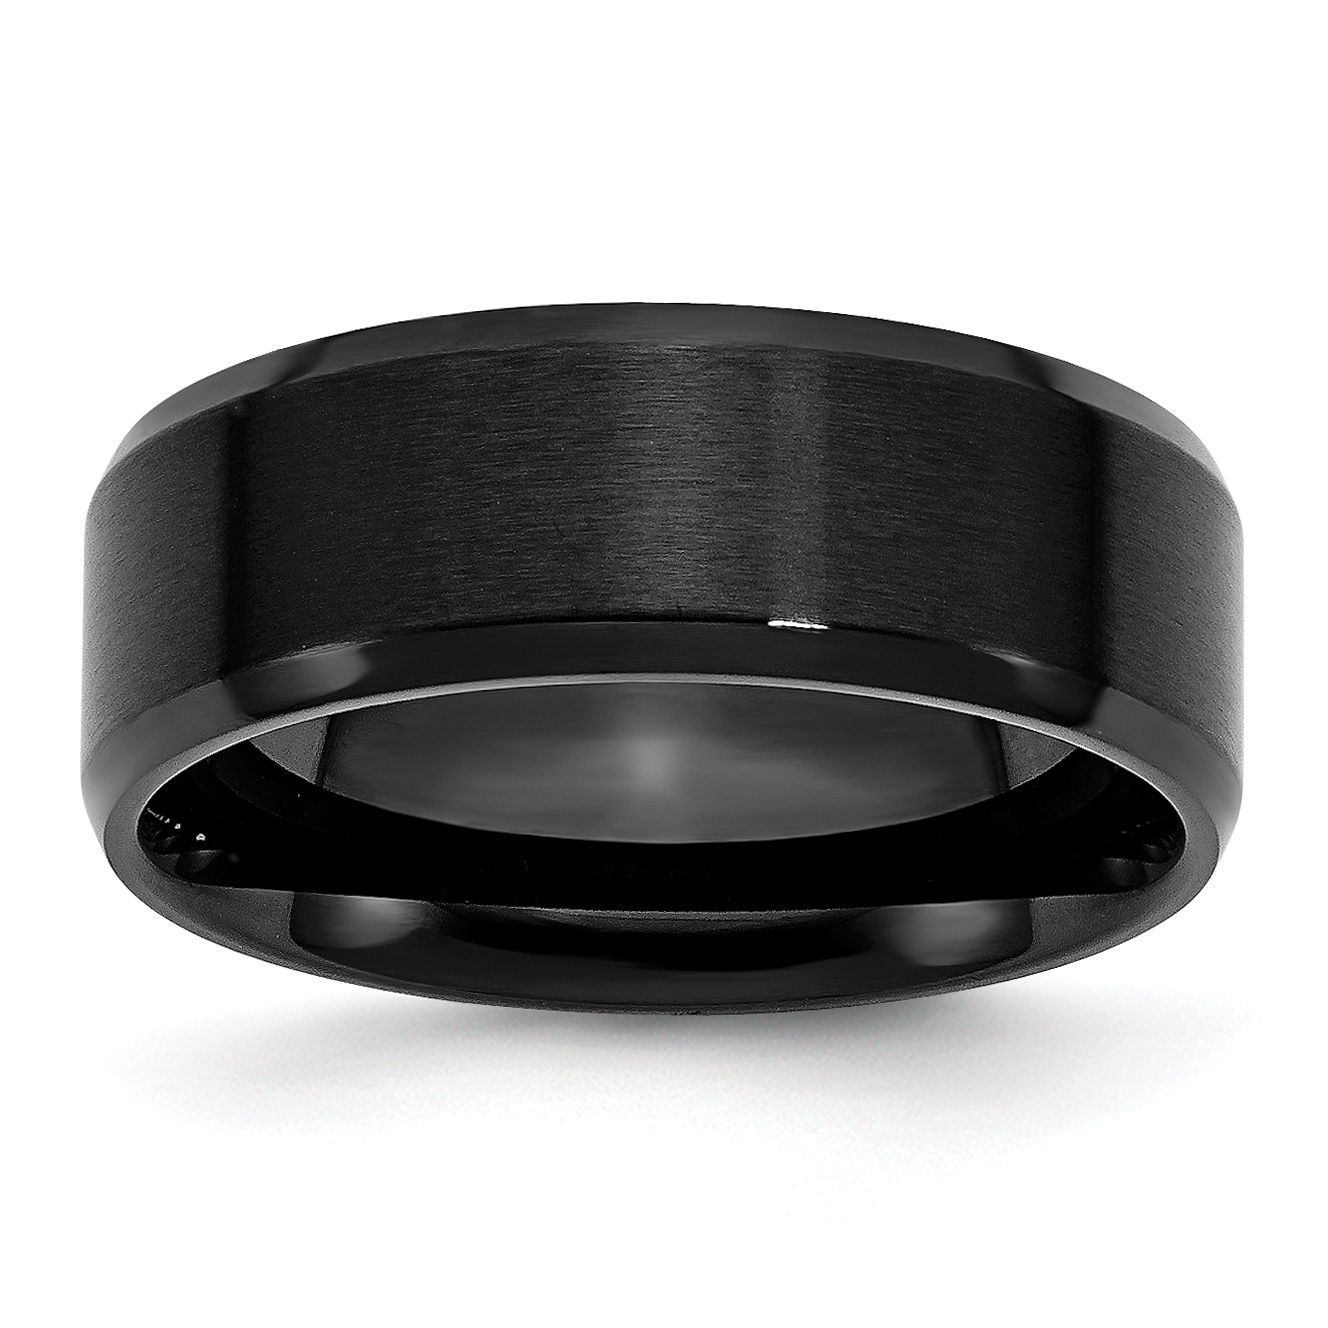 Stainless Steel Black IP Beveled Edge Classic Wedding Ring Band Size 5-14 